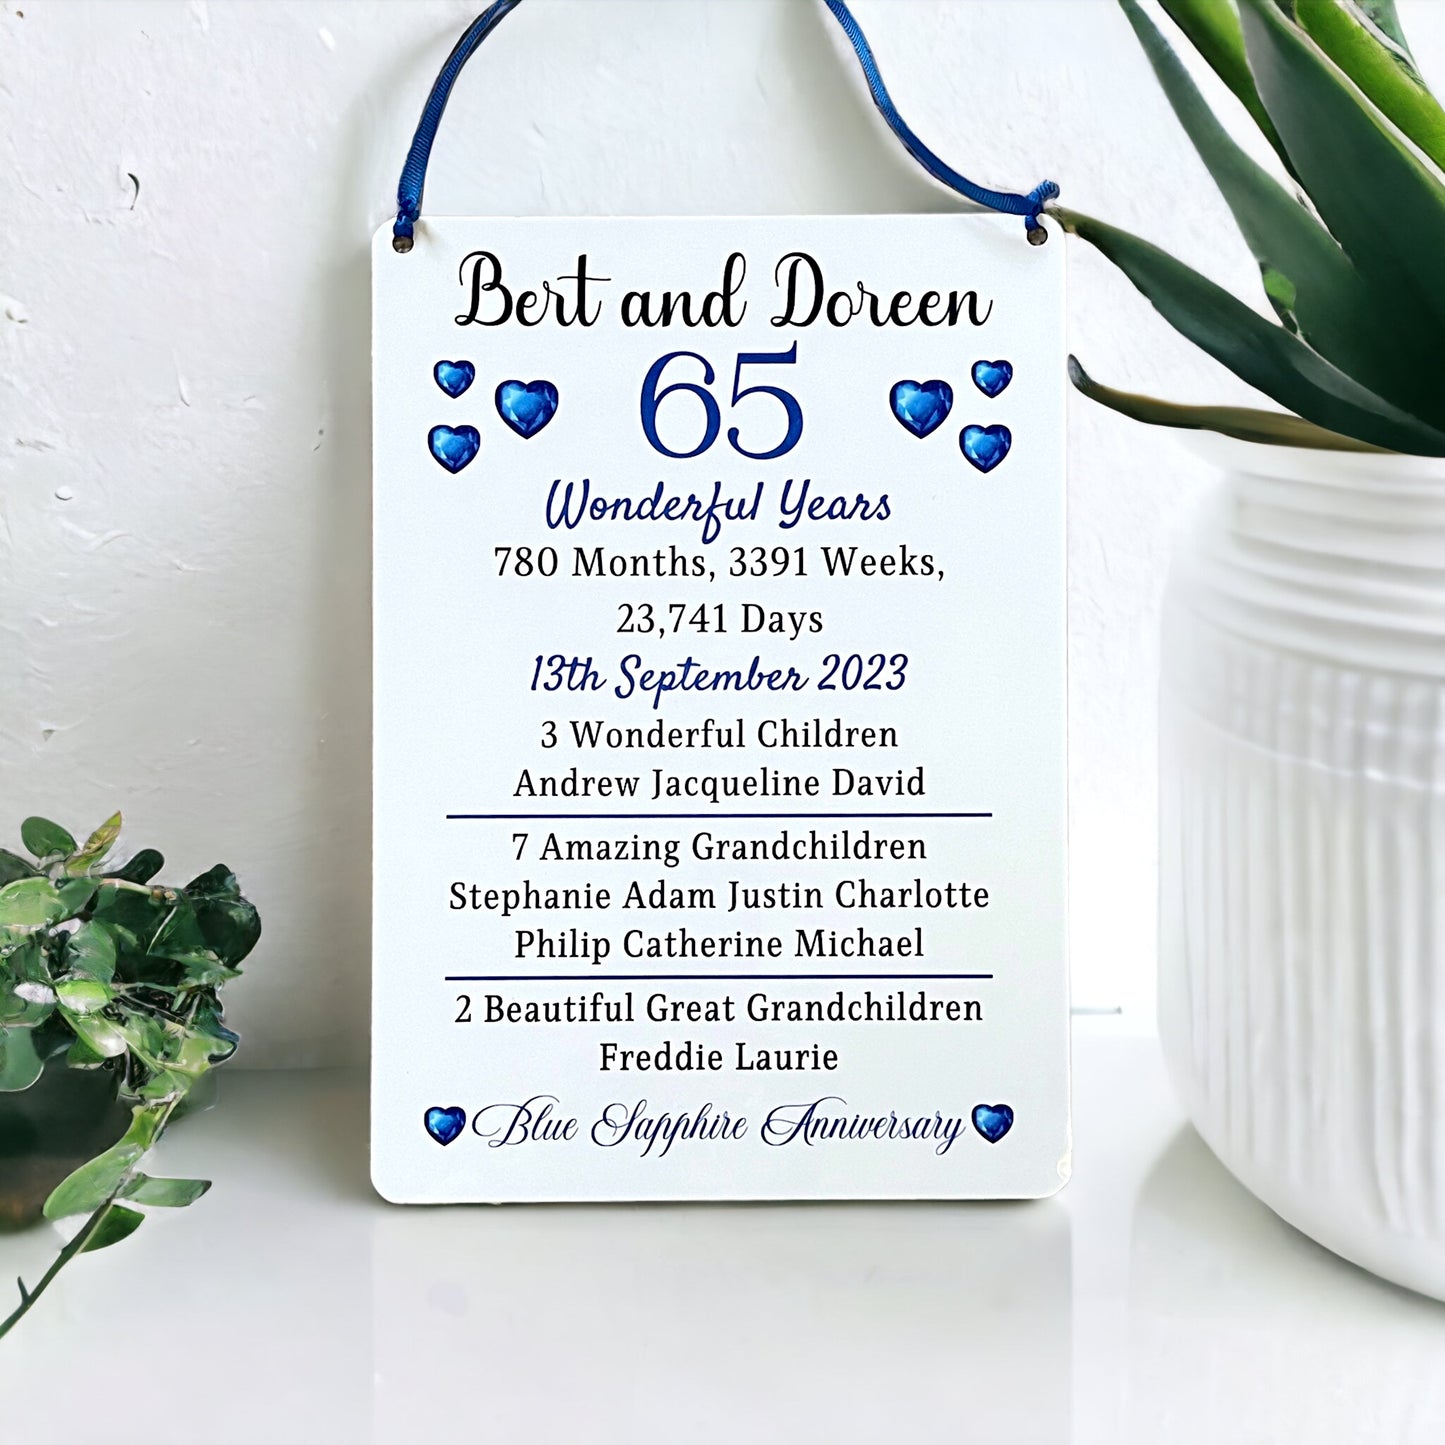 Blue Sapphire Wedding Anniversary Gift | 65th Wedding Anniversary